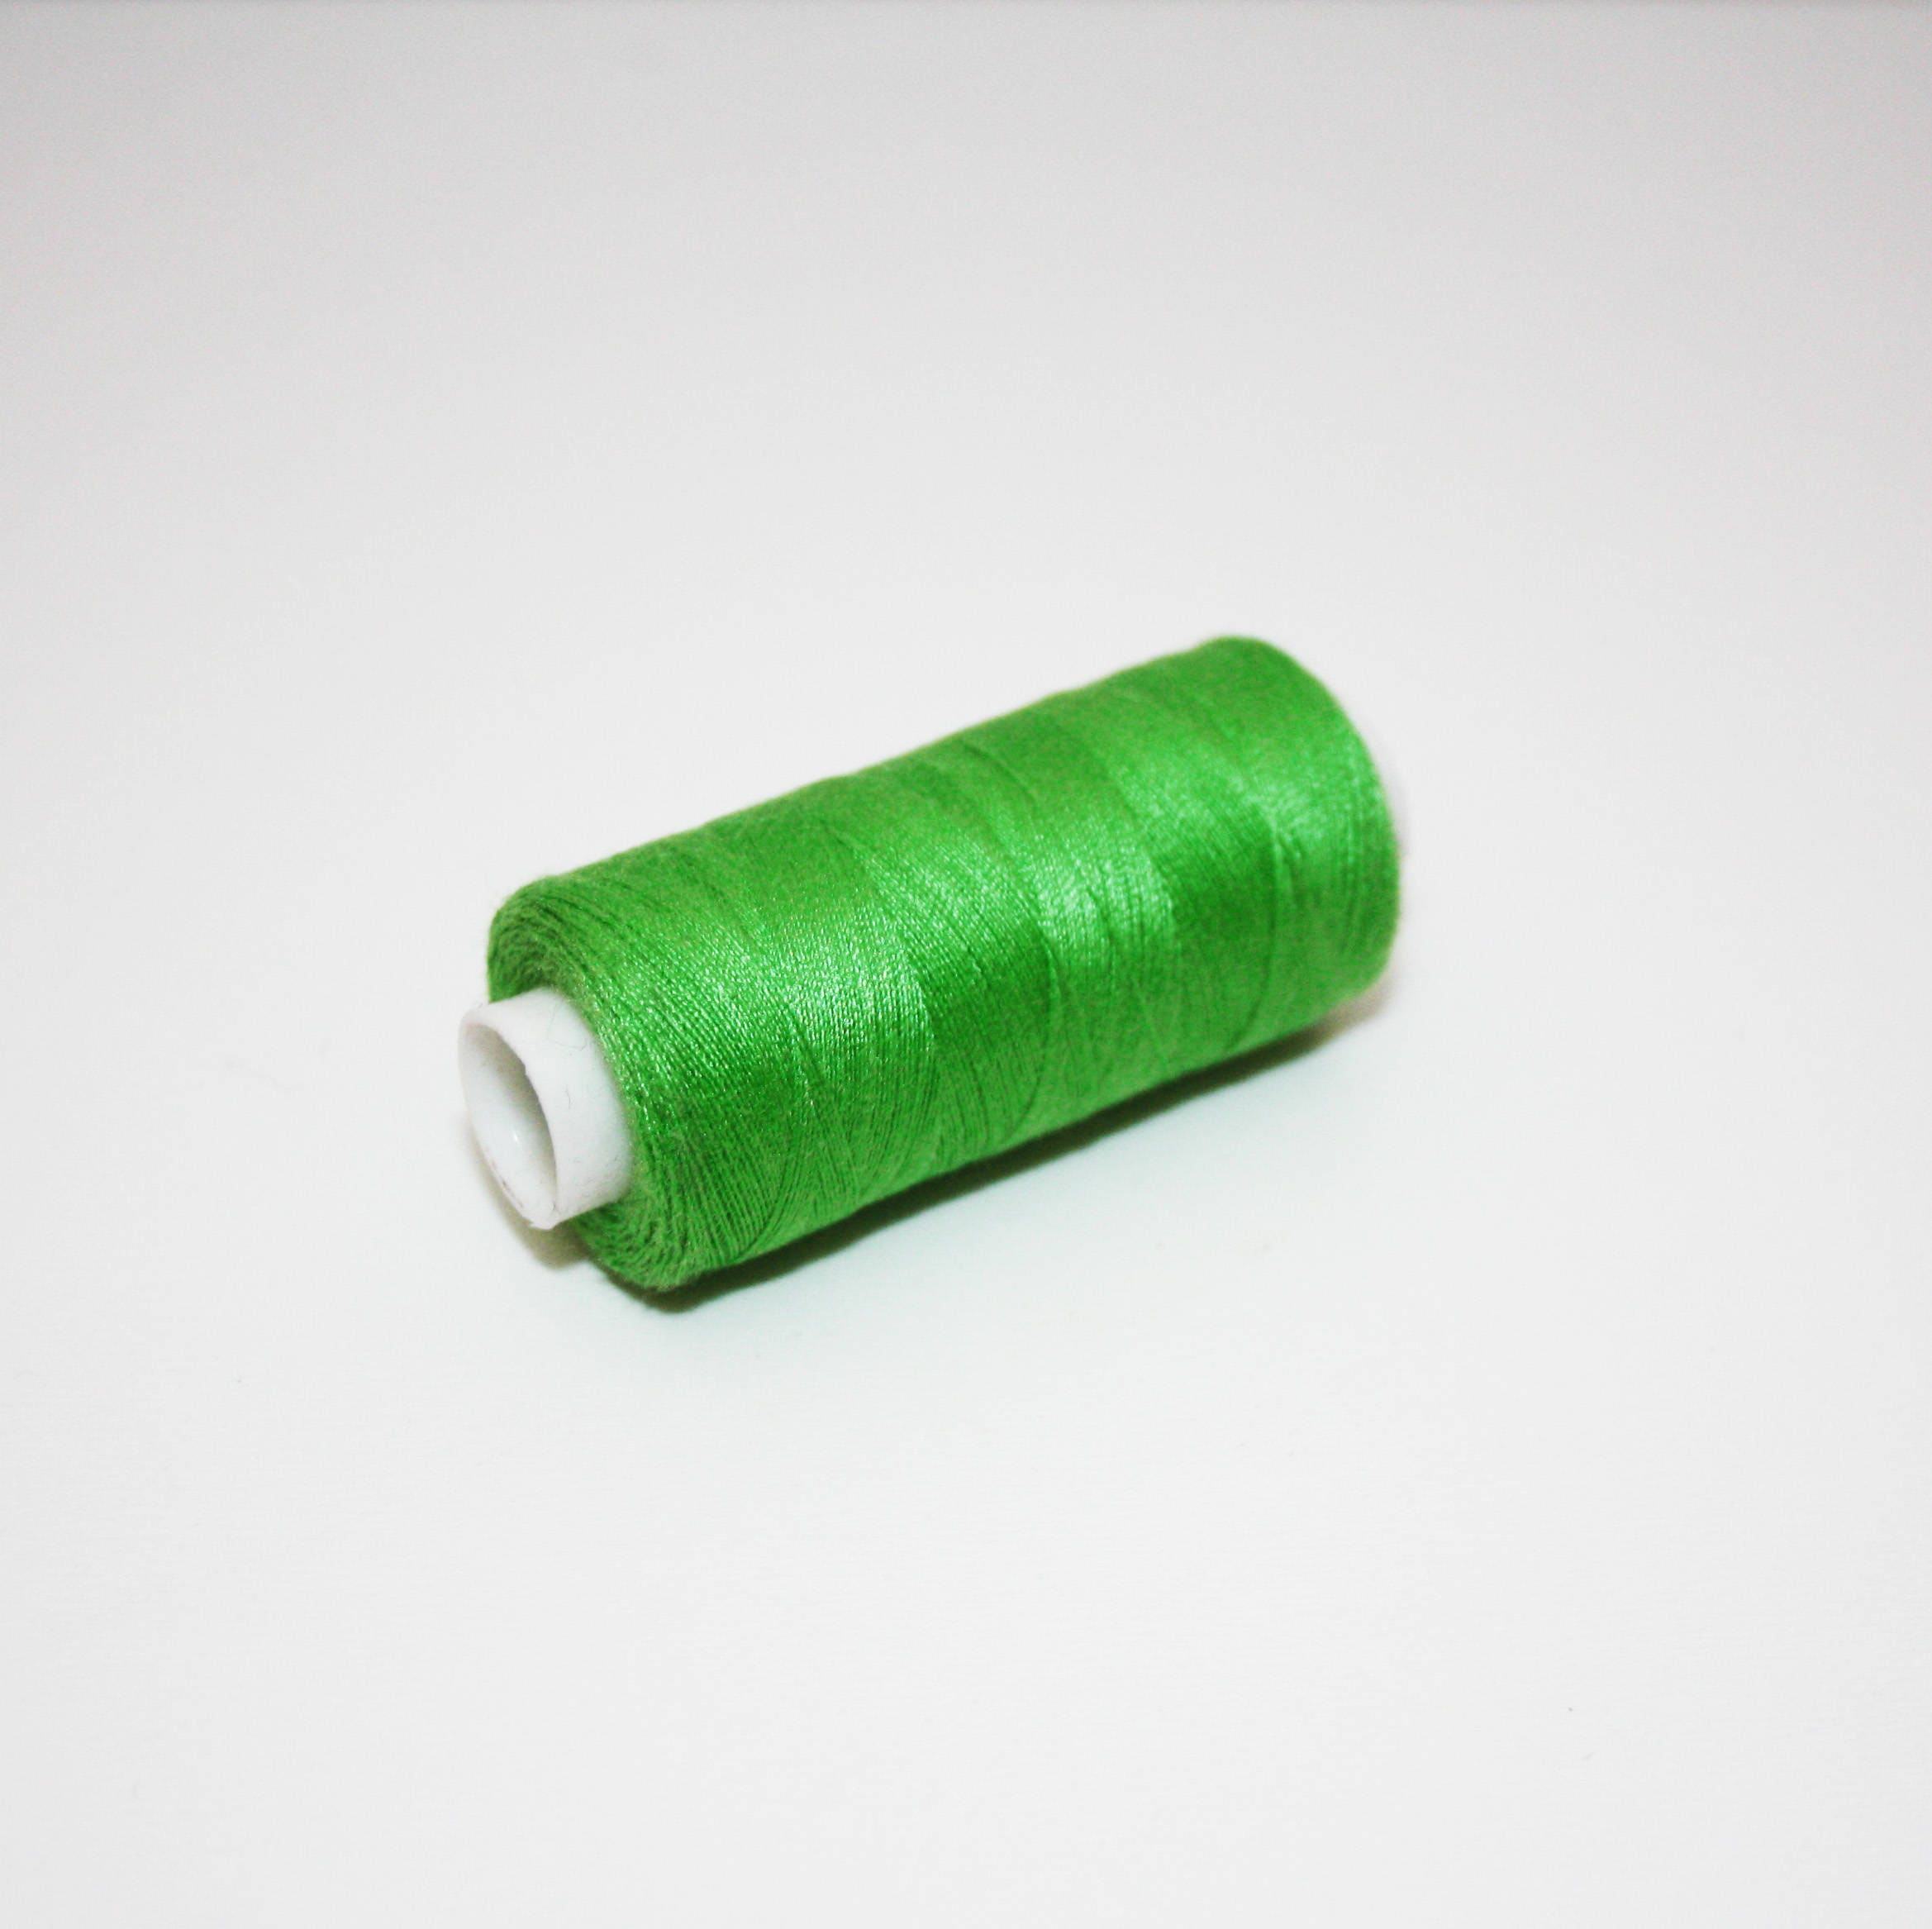 Sewing Thread Spool of Thread to Sew 350 M Green Apple Green 100